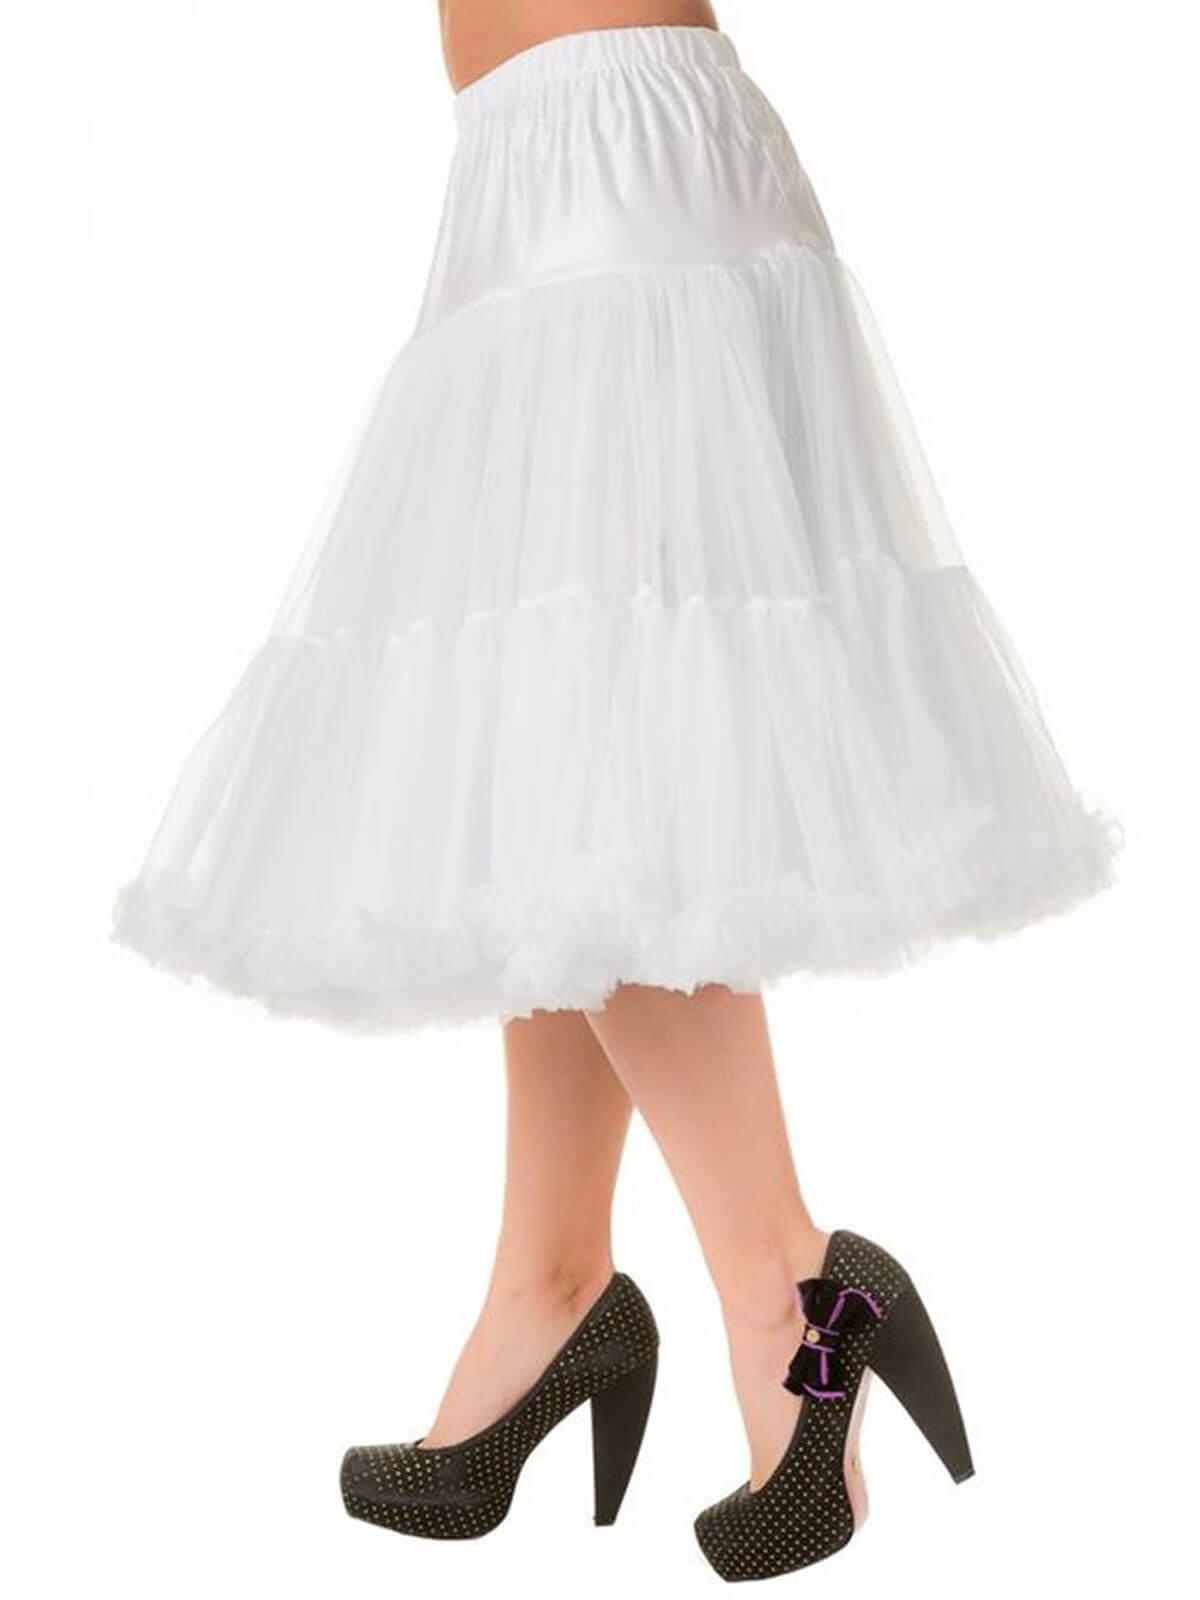 Layer Tulle Skirt Women Party Dress 50s Rockabilly Tutu Petticoat